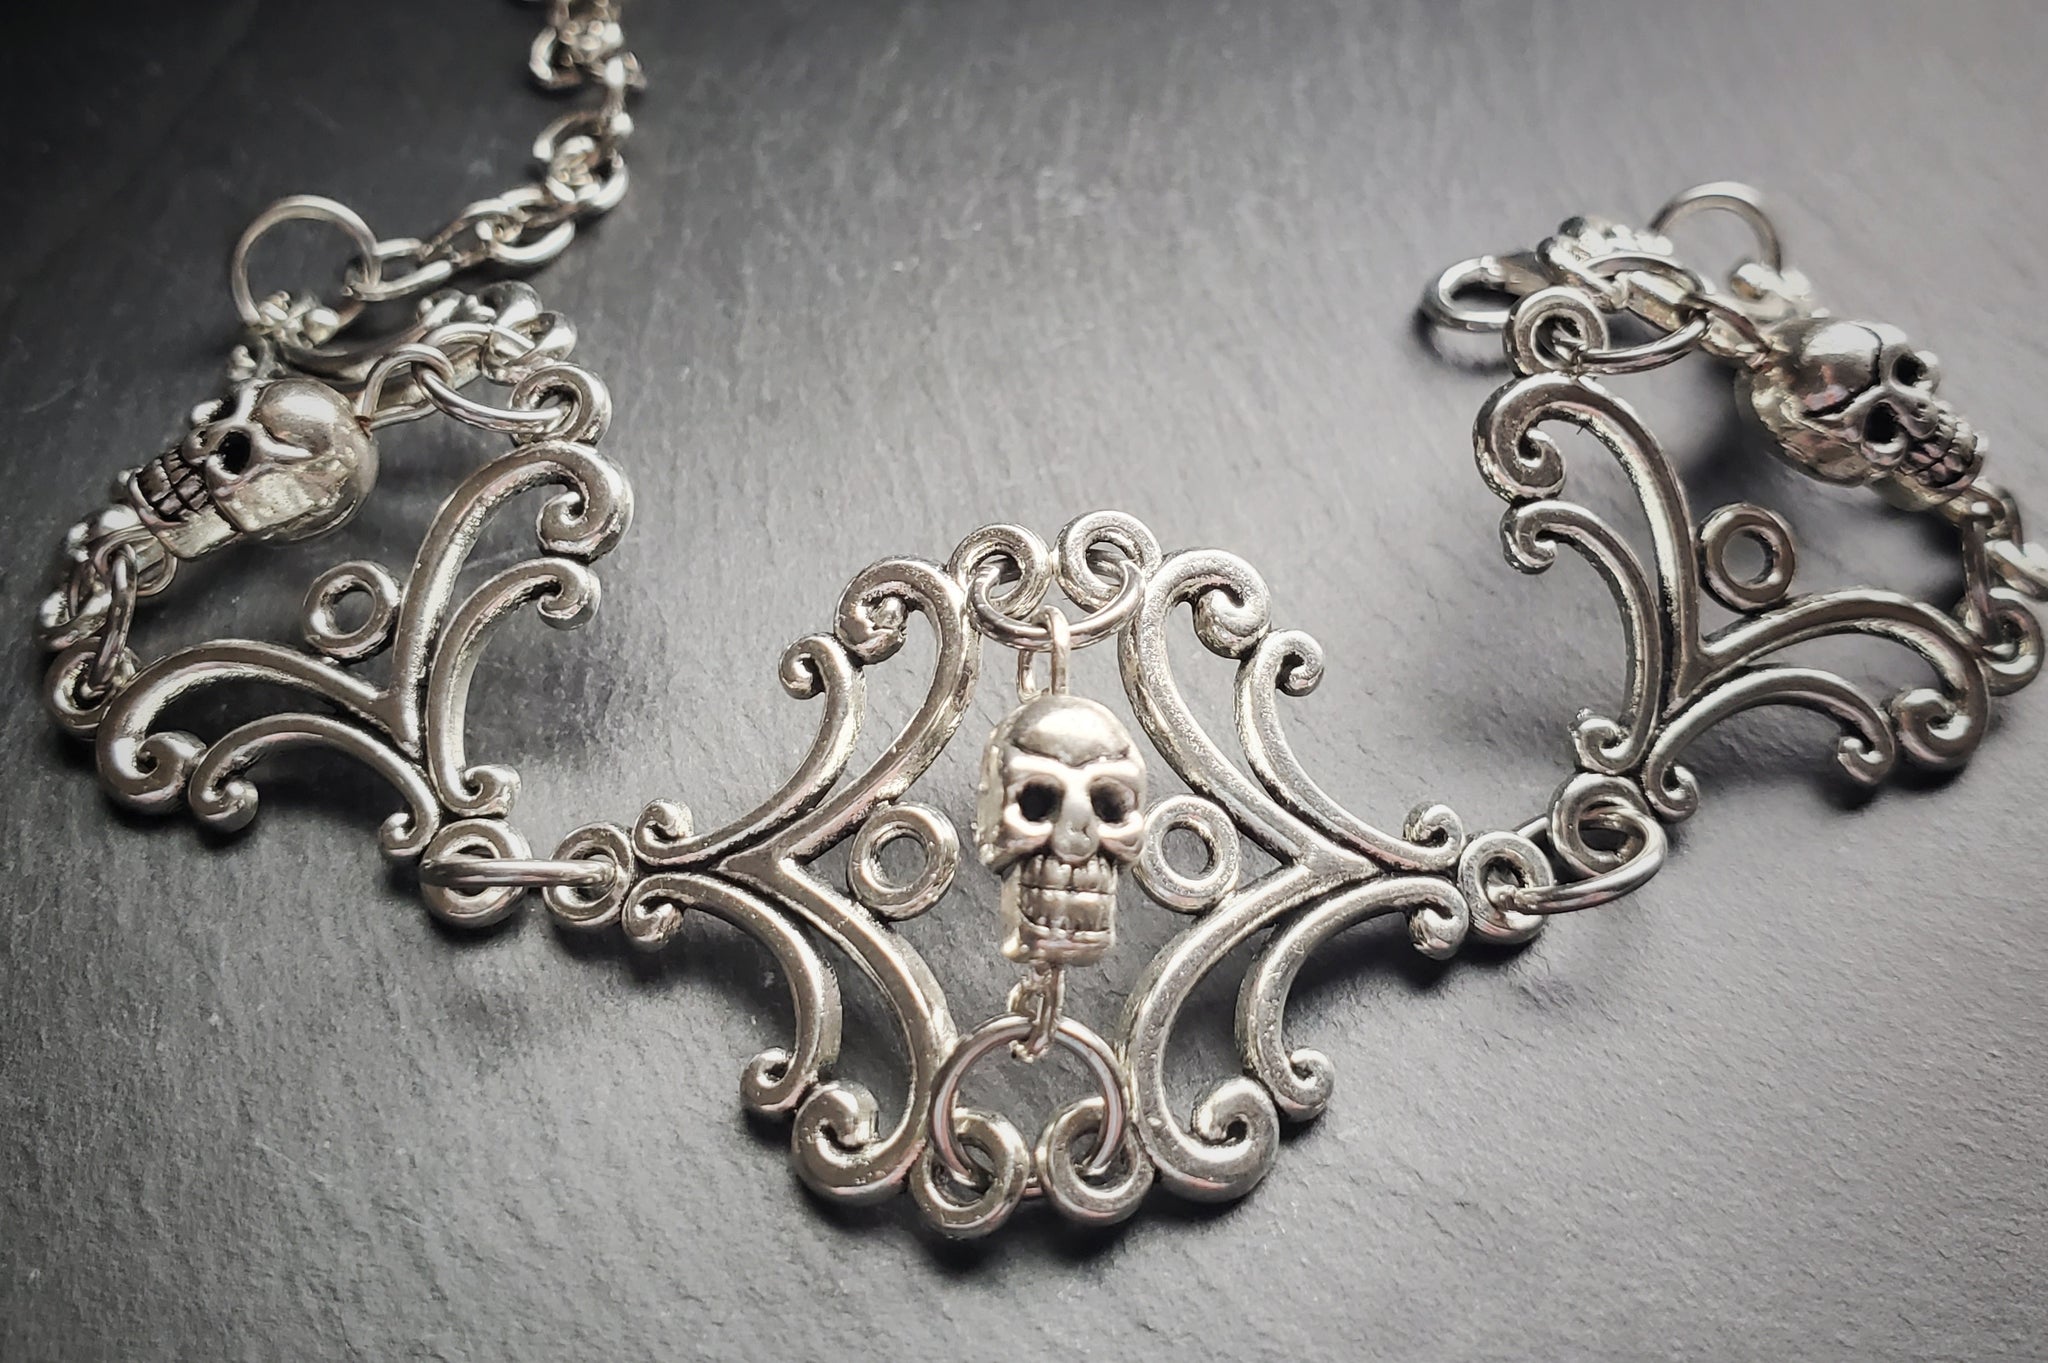 Gothic Skull Bracelet Victorian Goth Unique Jewelry